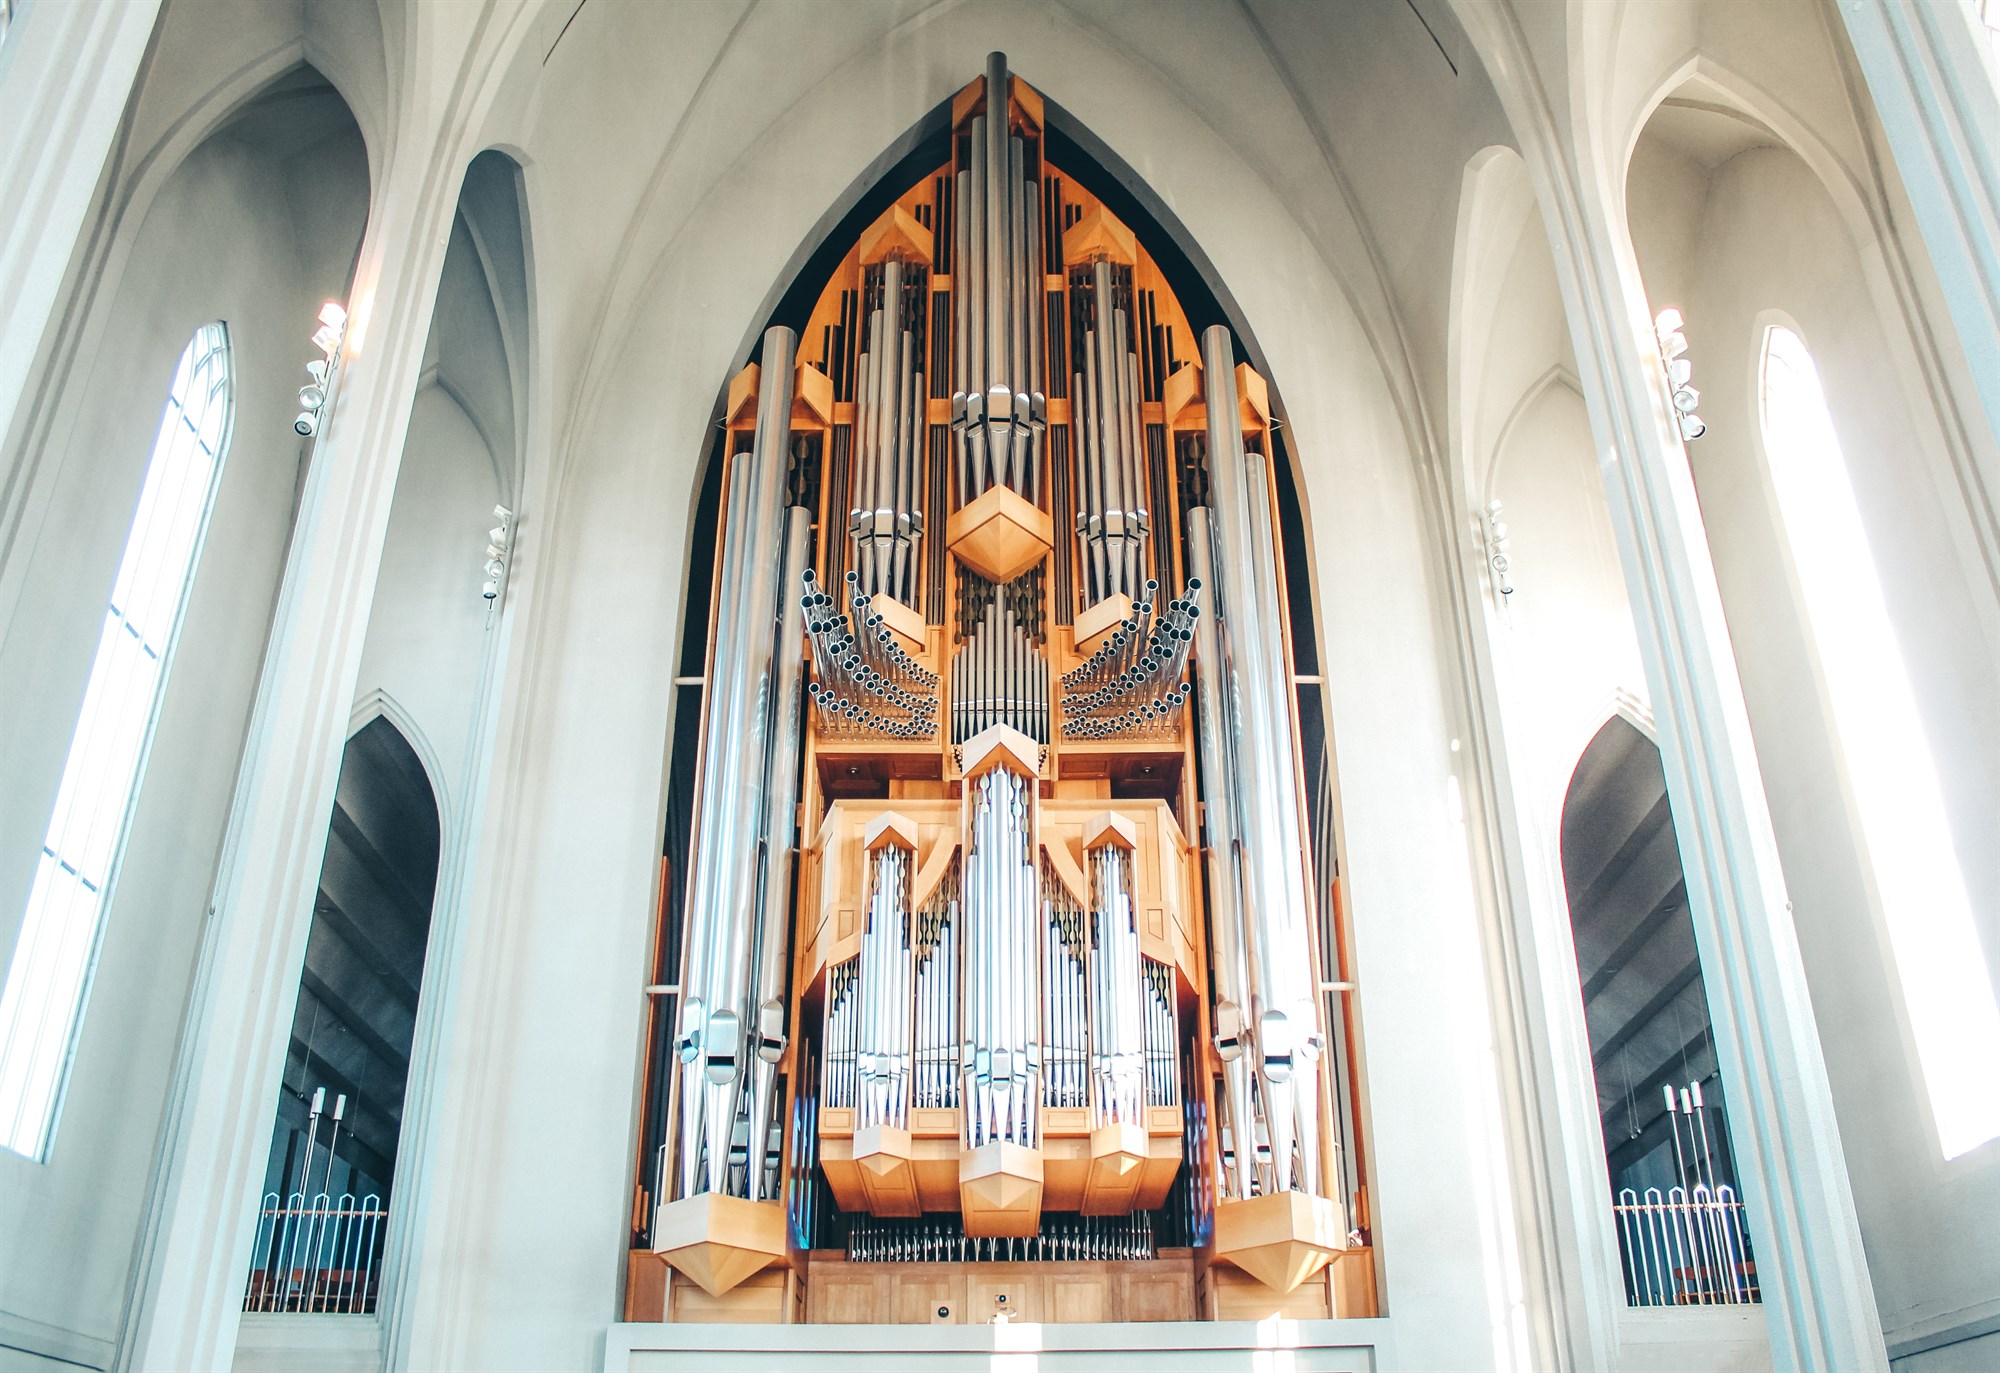 Organ inside the Hallgrimskirkja Church in Iceland